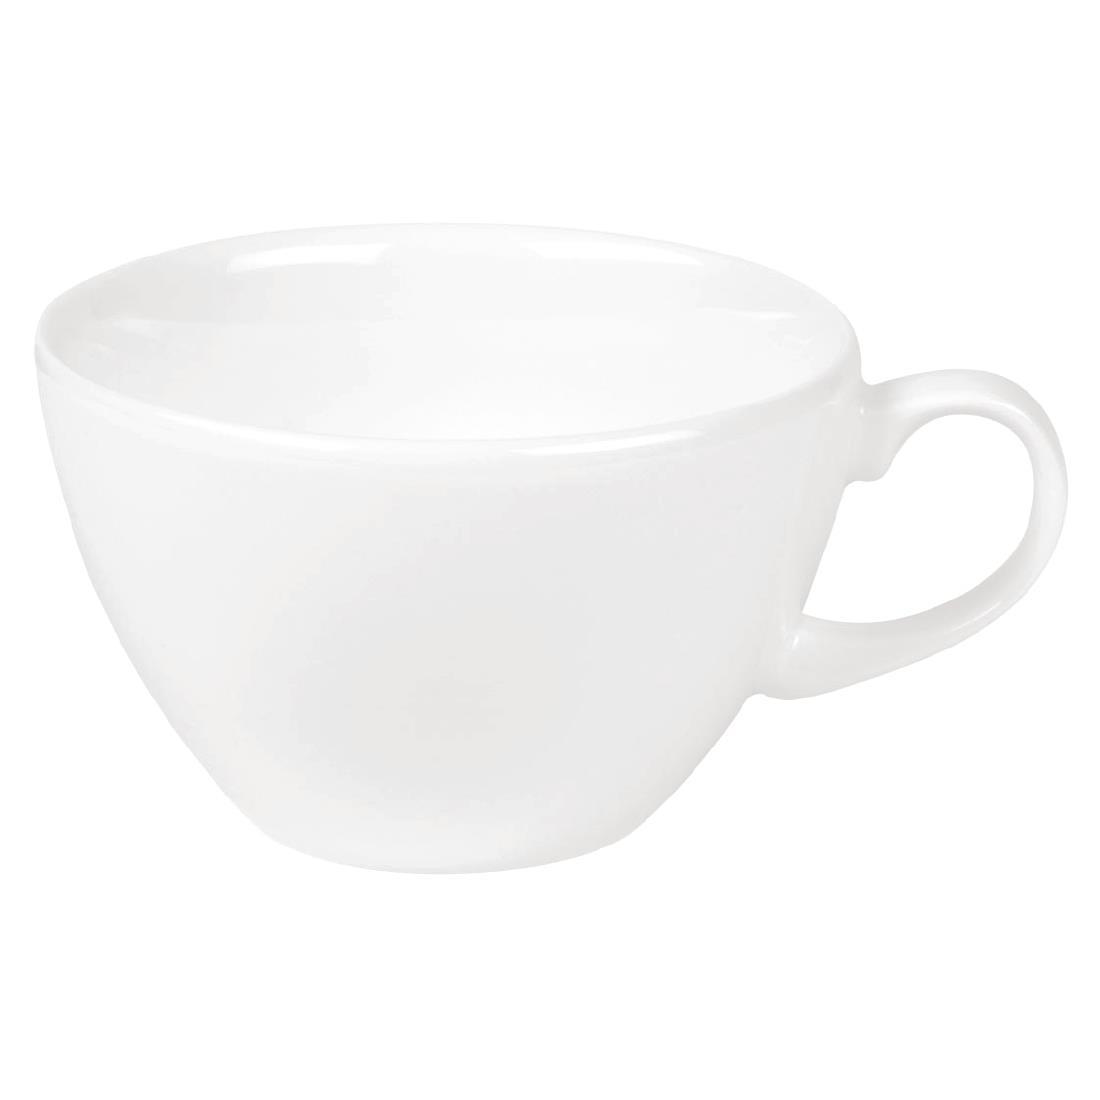 Churchill Alchemy Sequel White Tea Cup 220ml 8oz (Pack of 24) - DC378  - 1